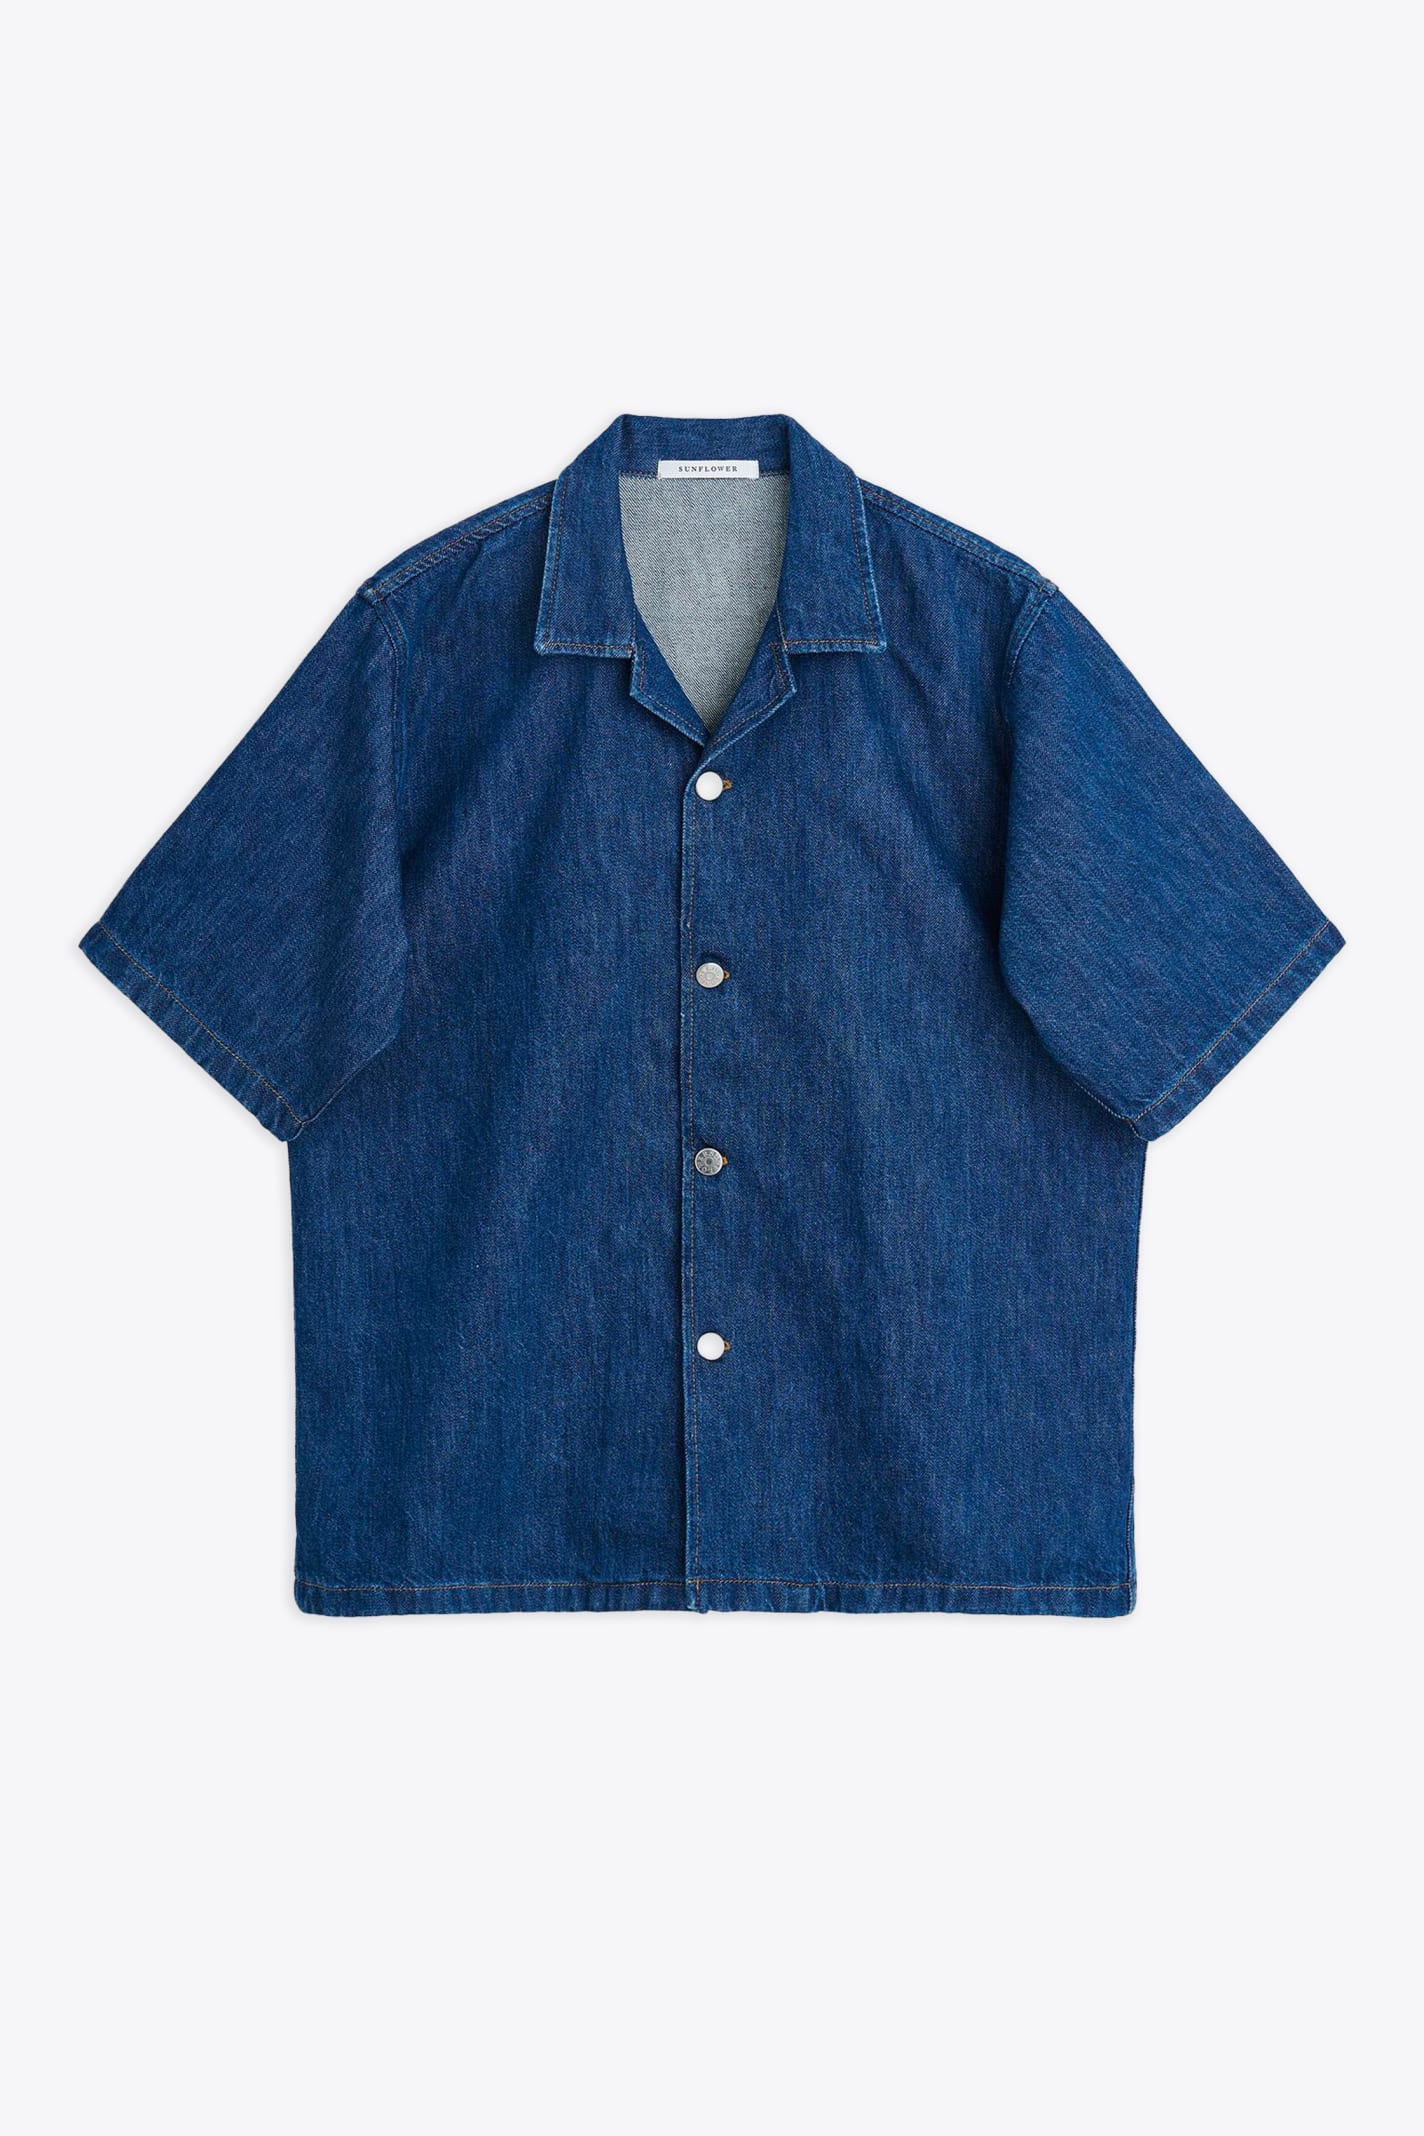 #5090 Blue rinse denim shirt with short sleeves - Loose Shirt